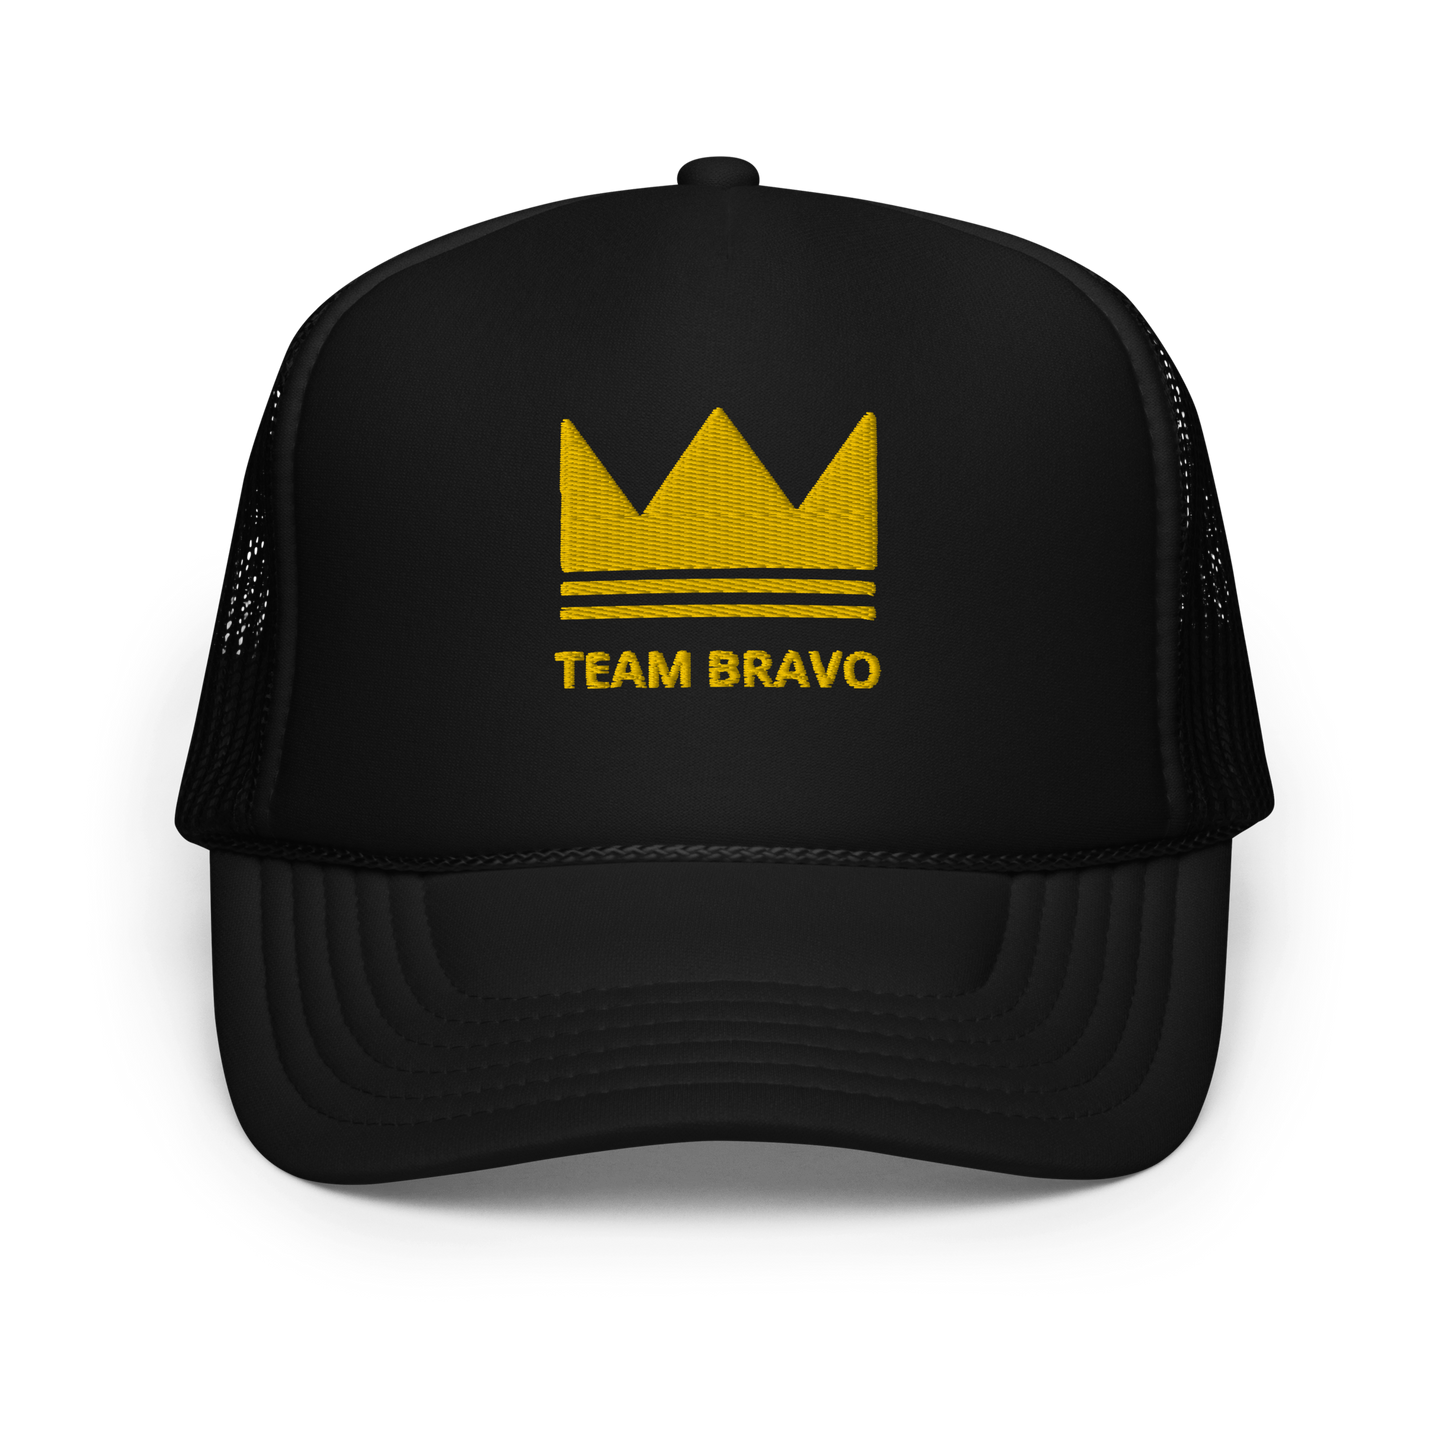 Team Bravo Foam trucker hat Black & Gold